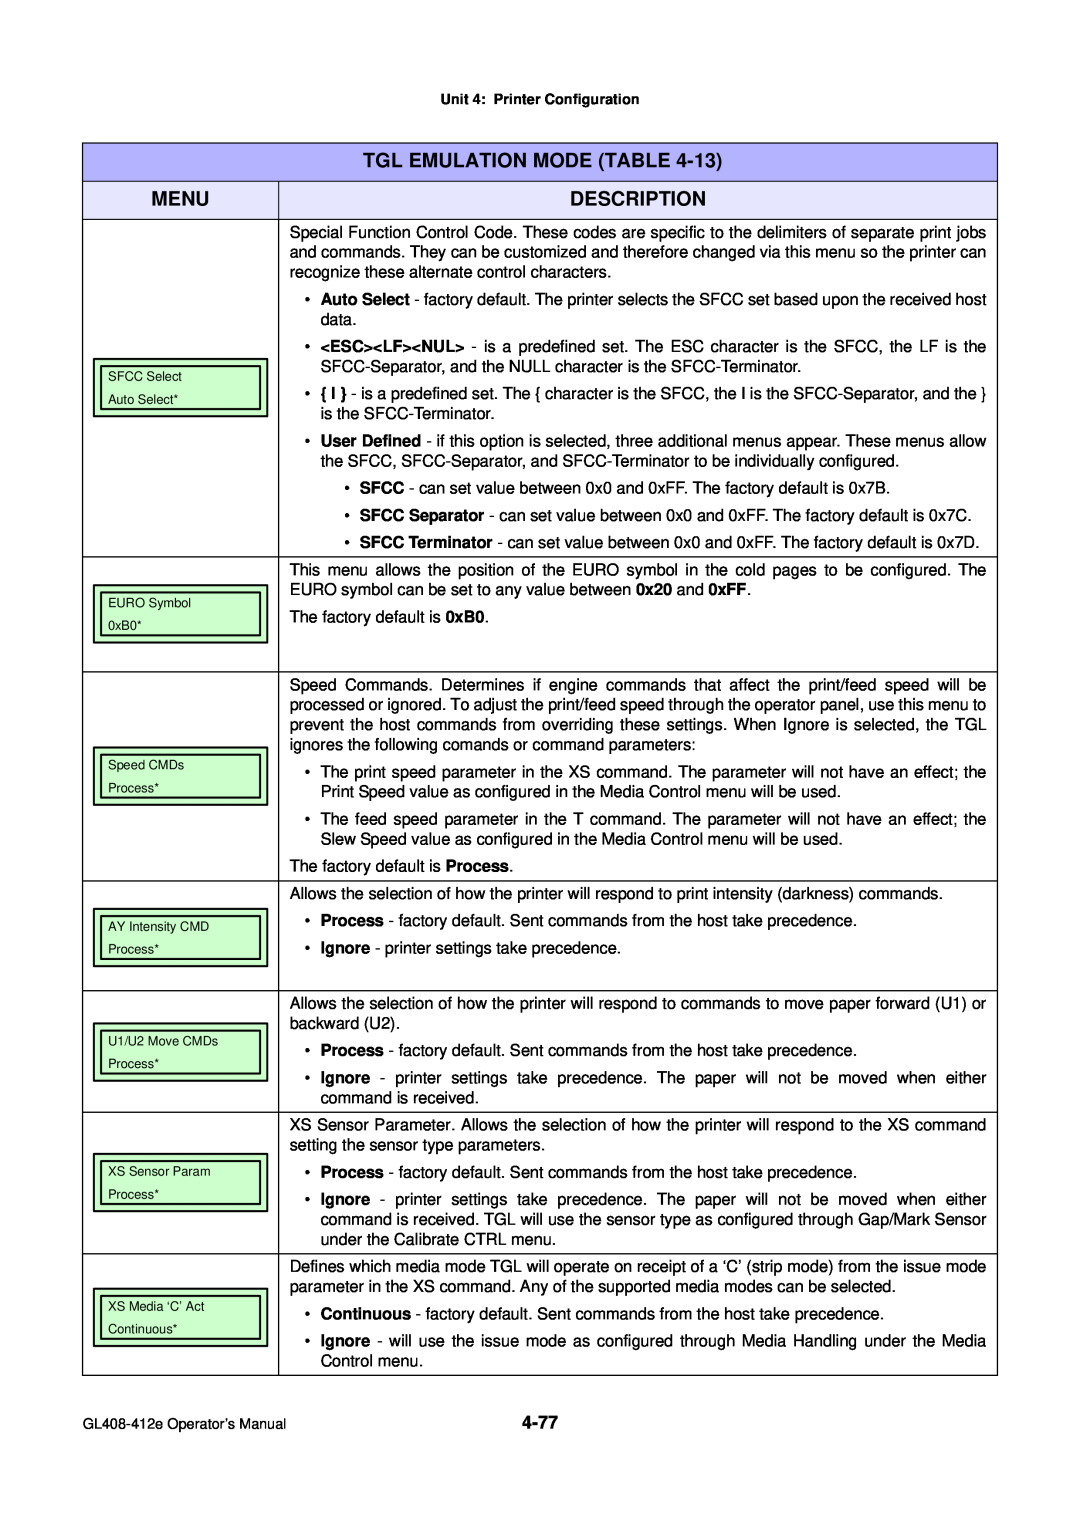 SATO GL4XXE manual Tgl Emulation Mode Table, Menu, Description 